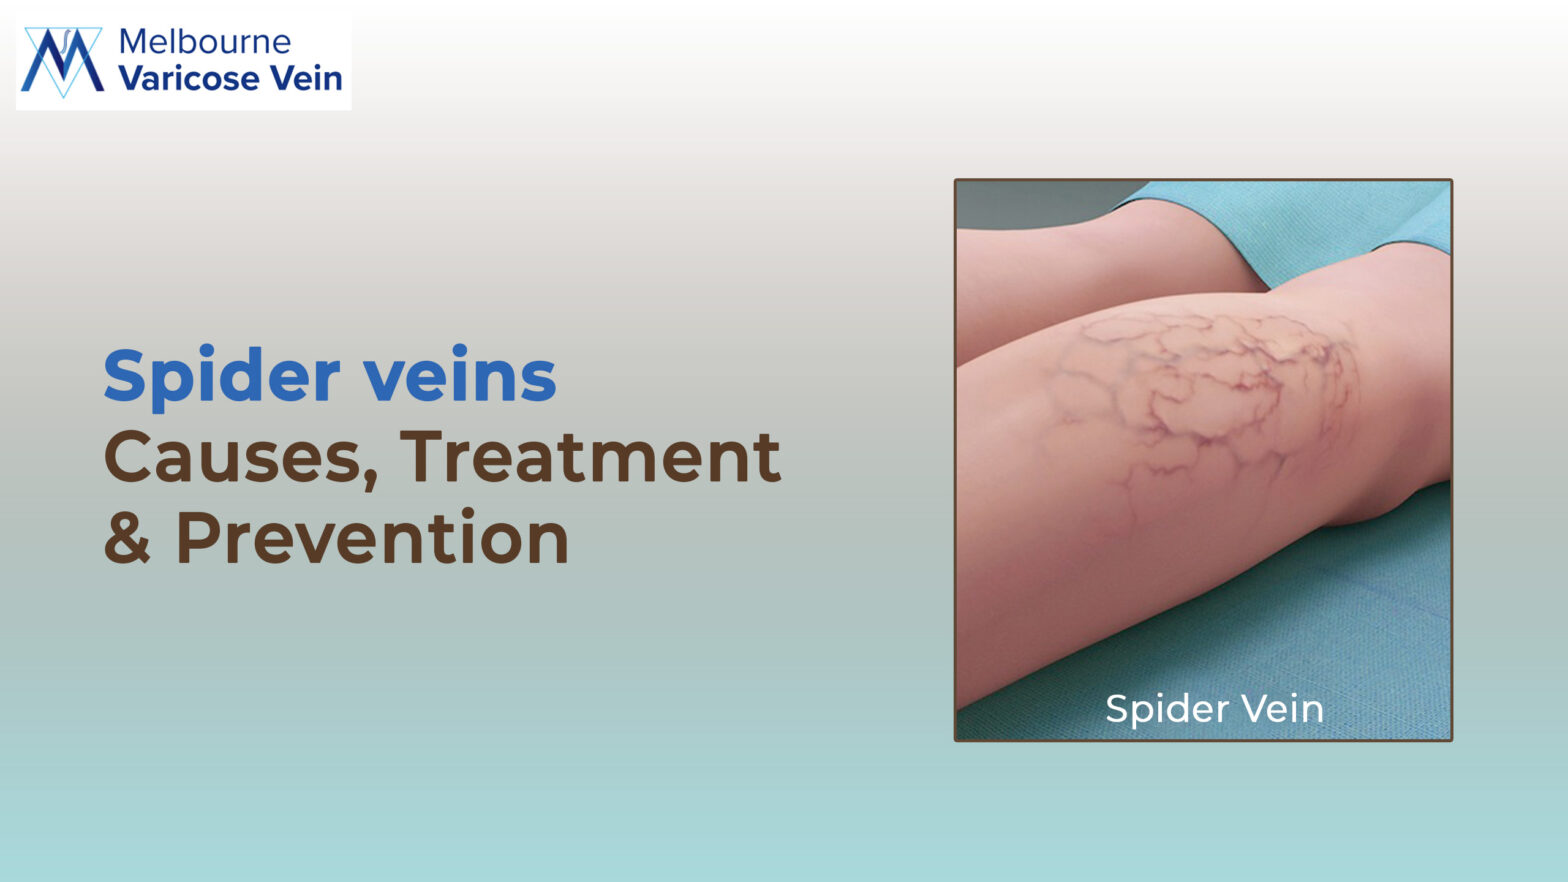 Spider veins: Causes, Treatment, & Prevention